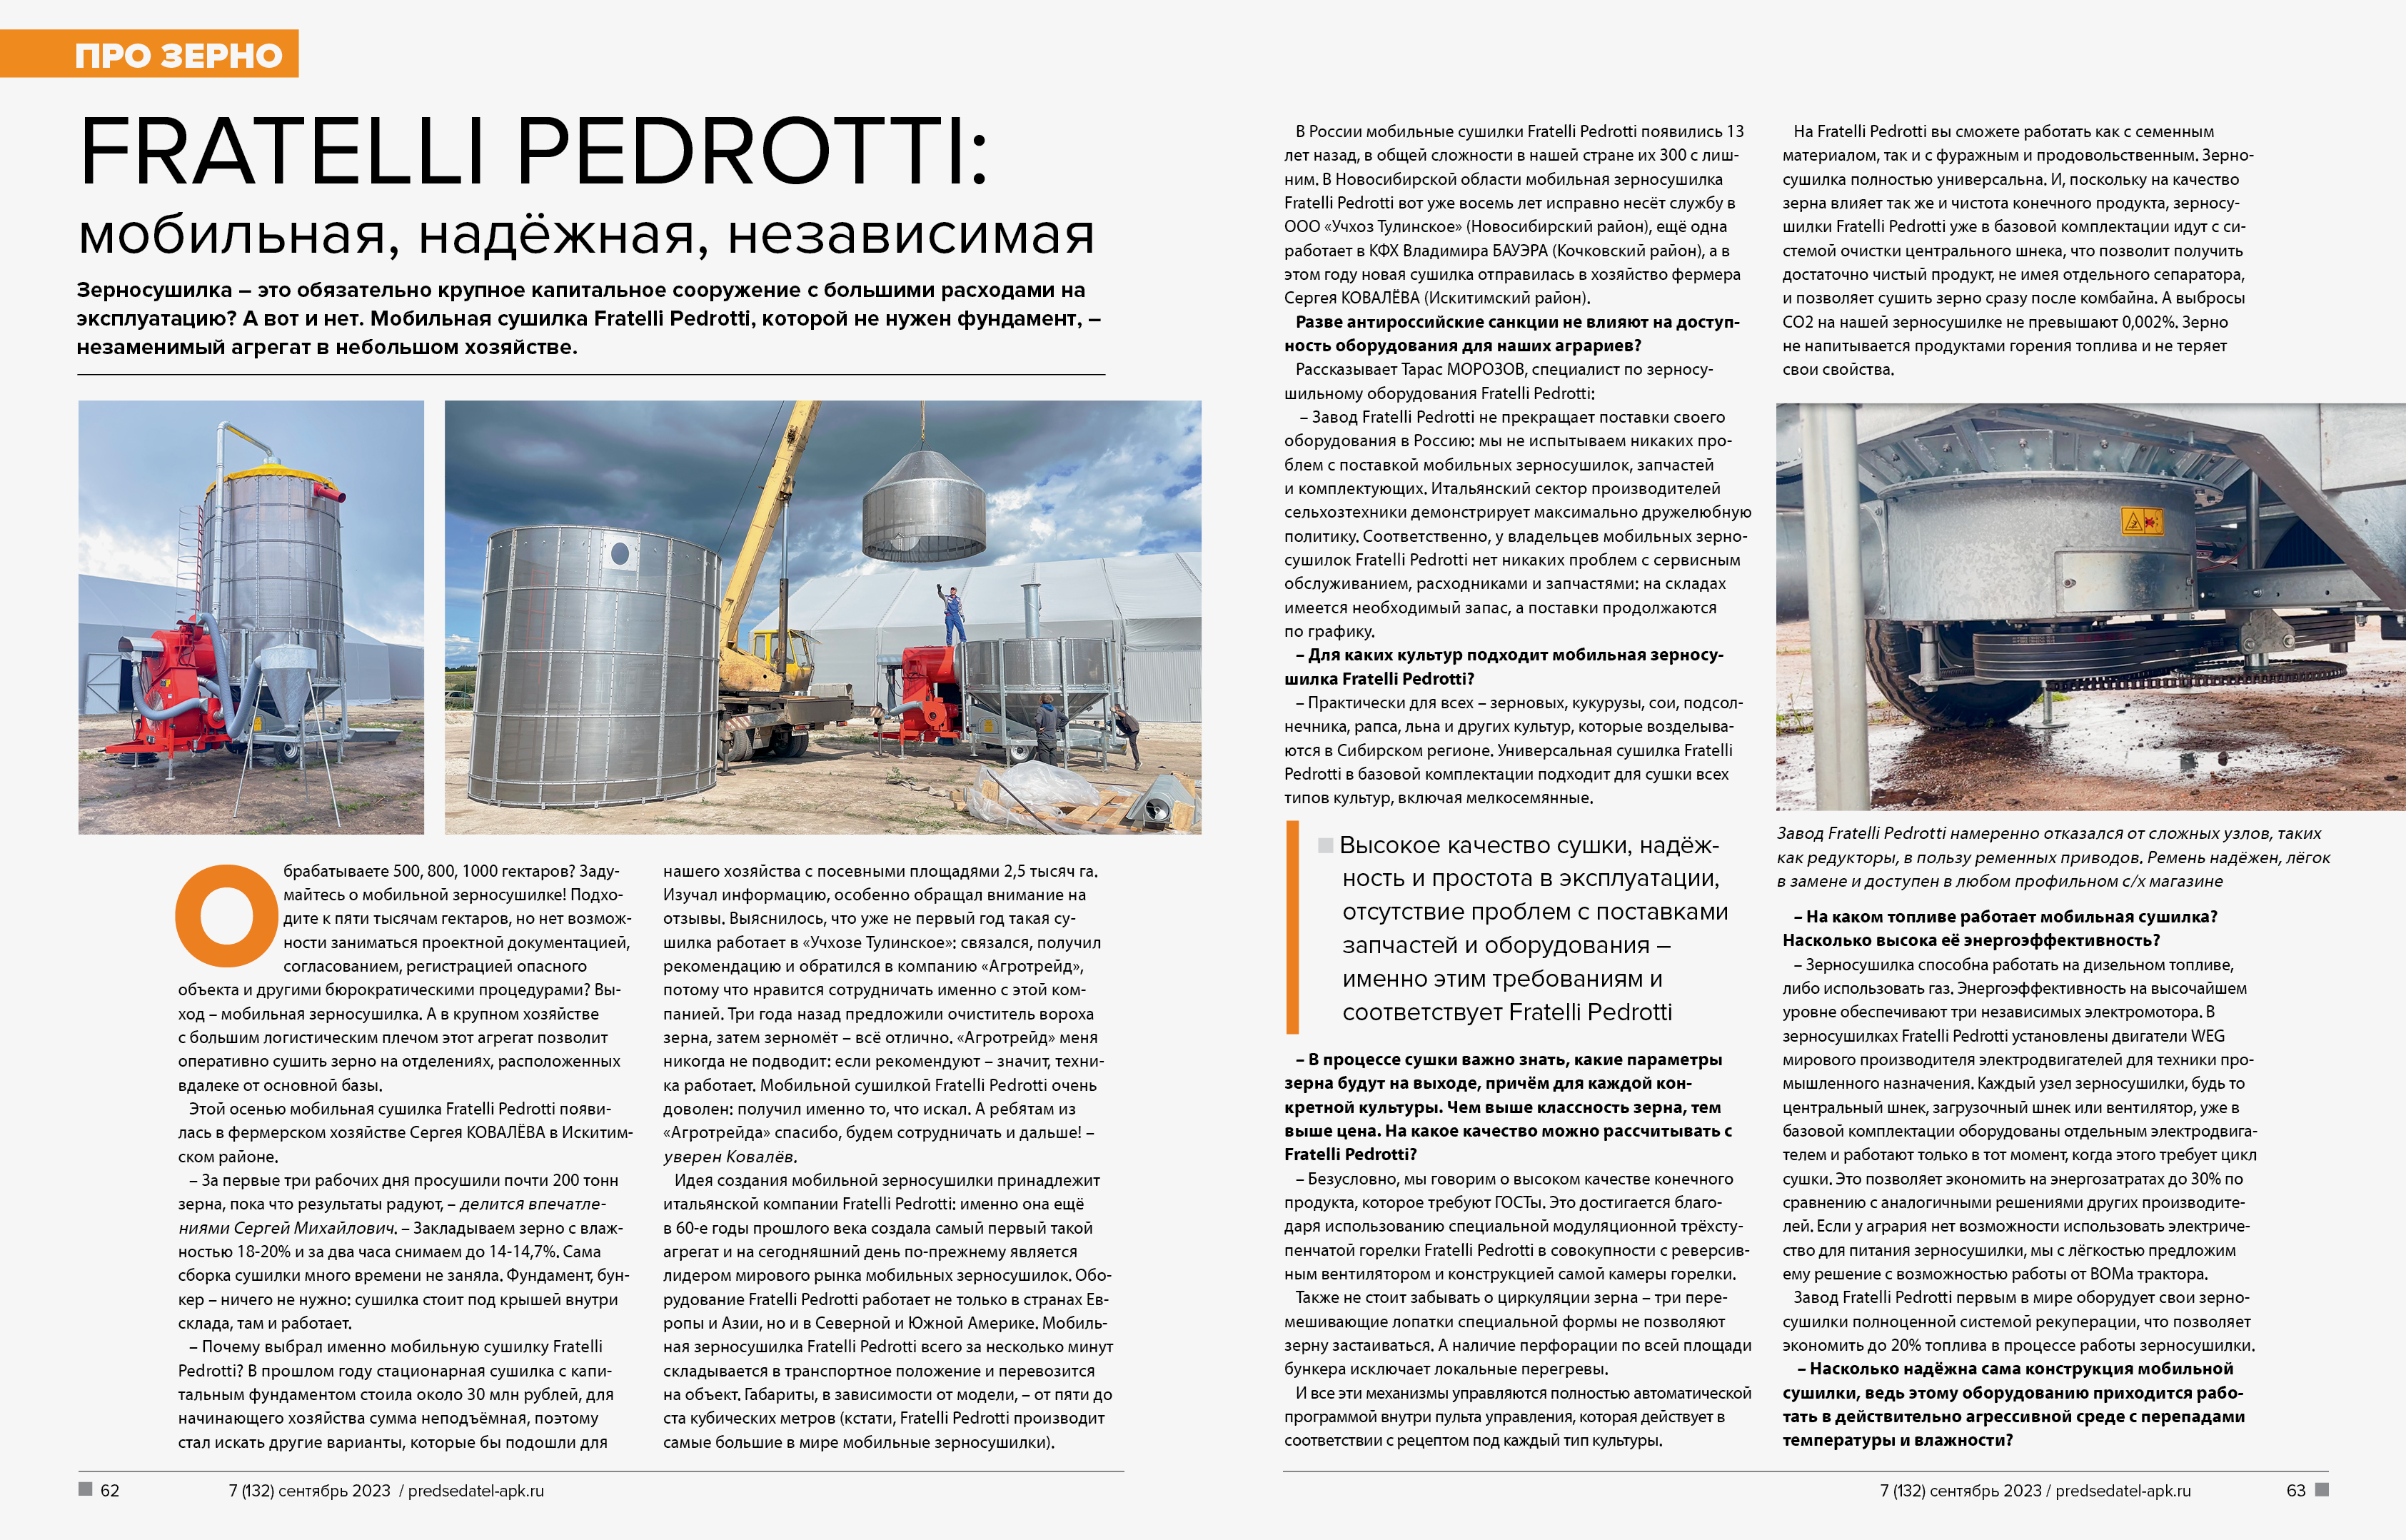 Fratelli Pedrotti: мобильная, надёжная, независимая